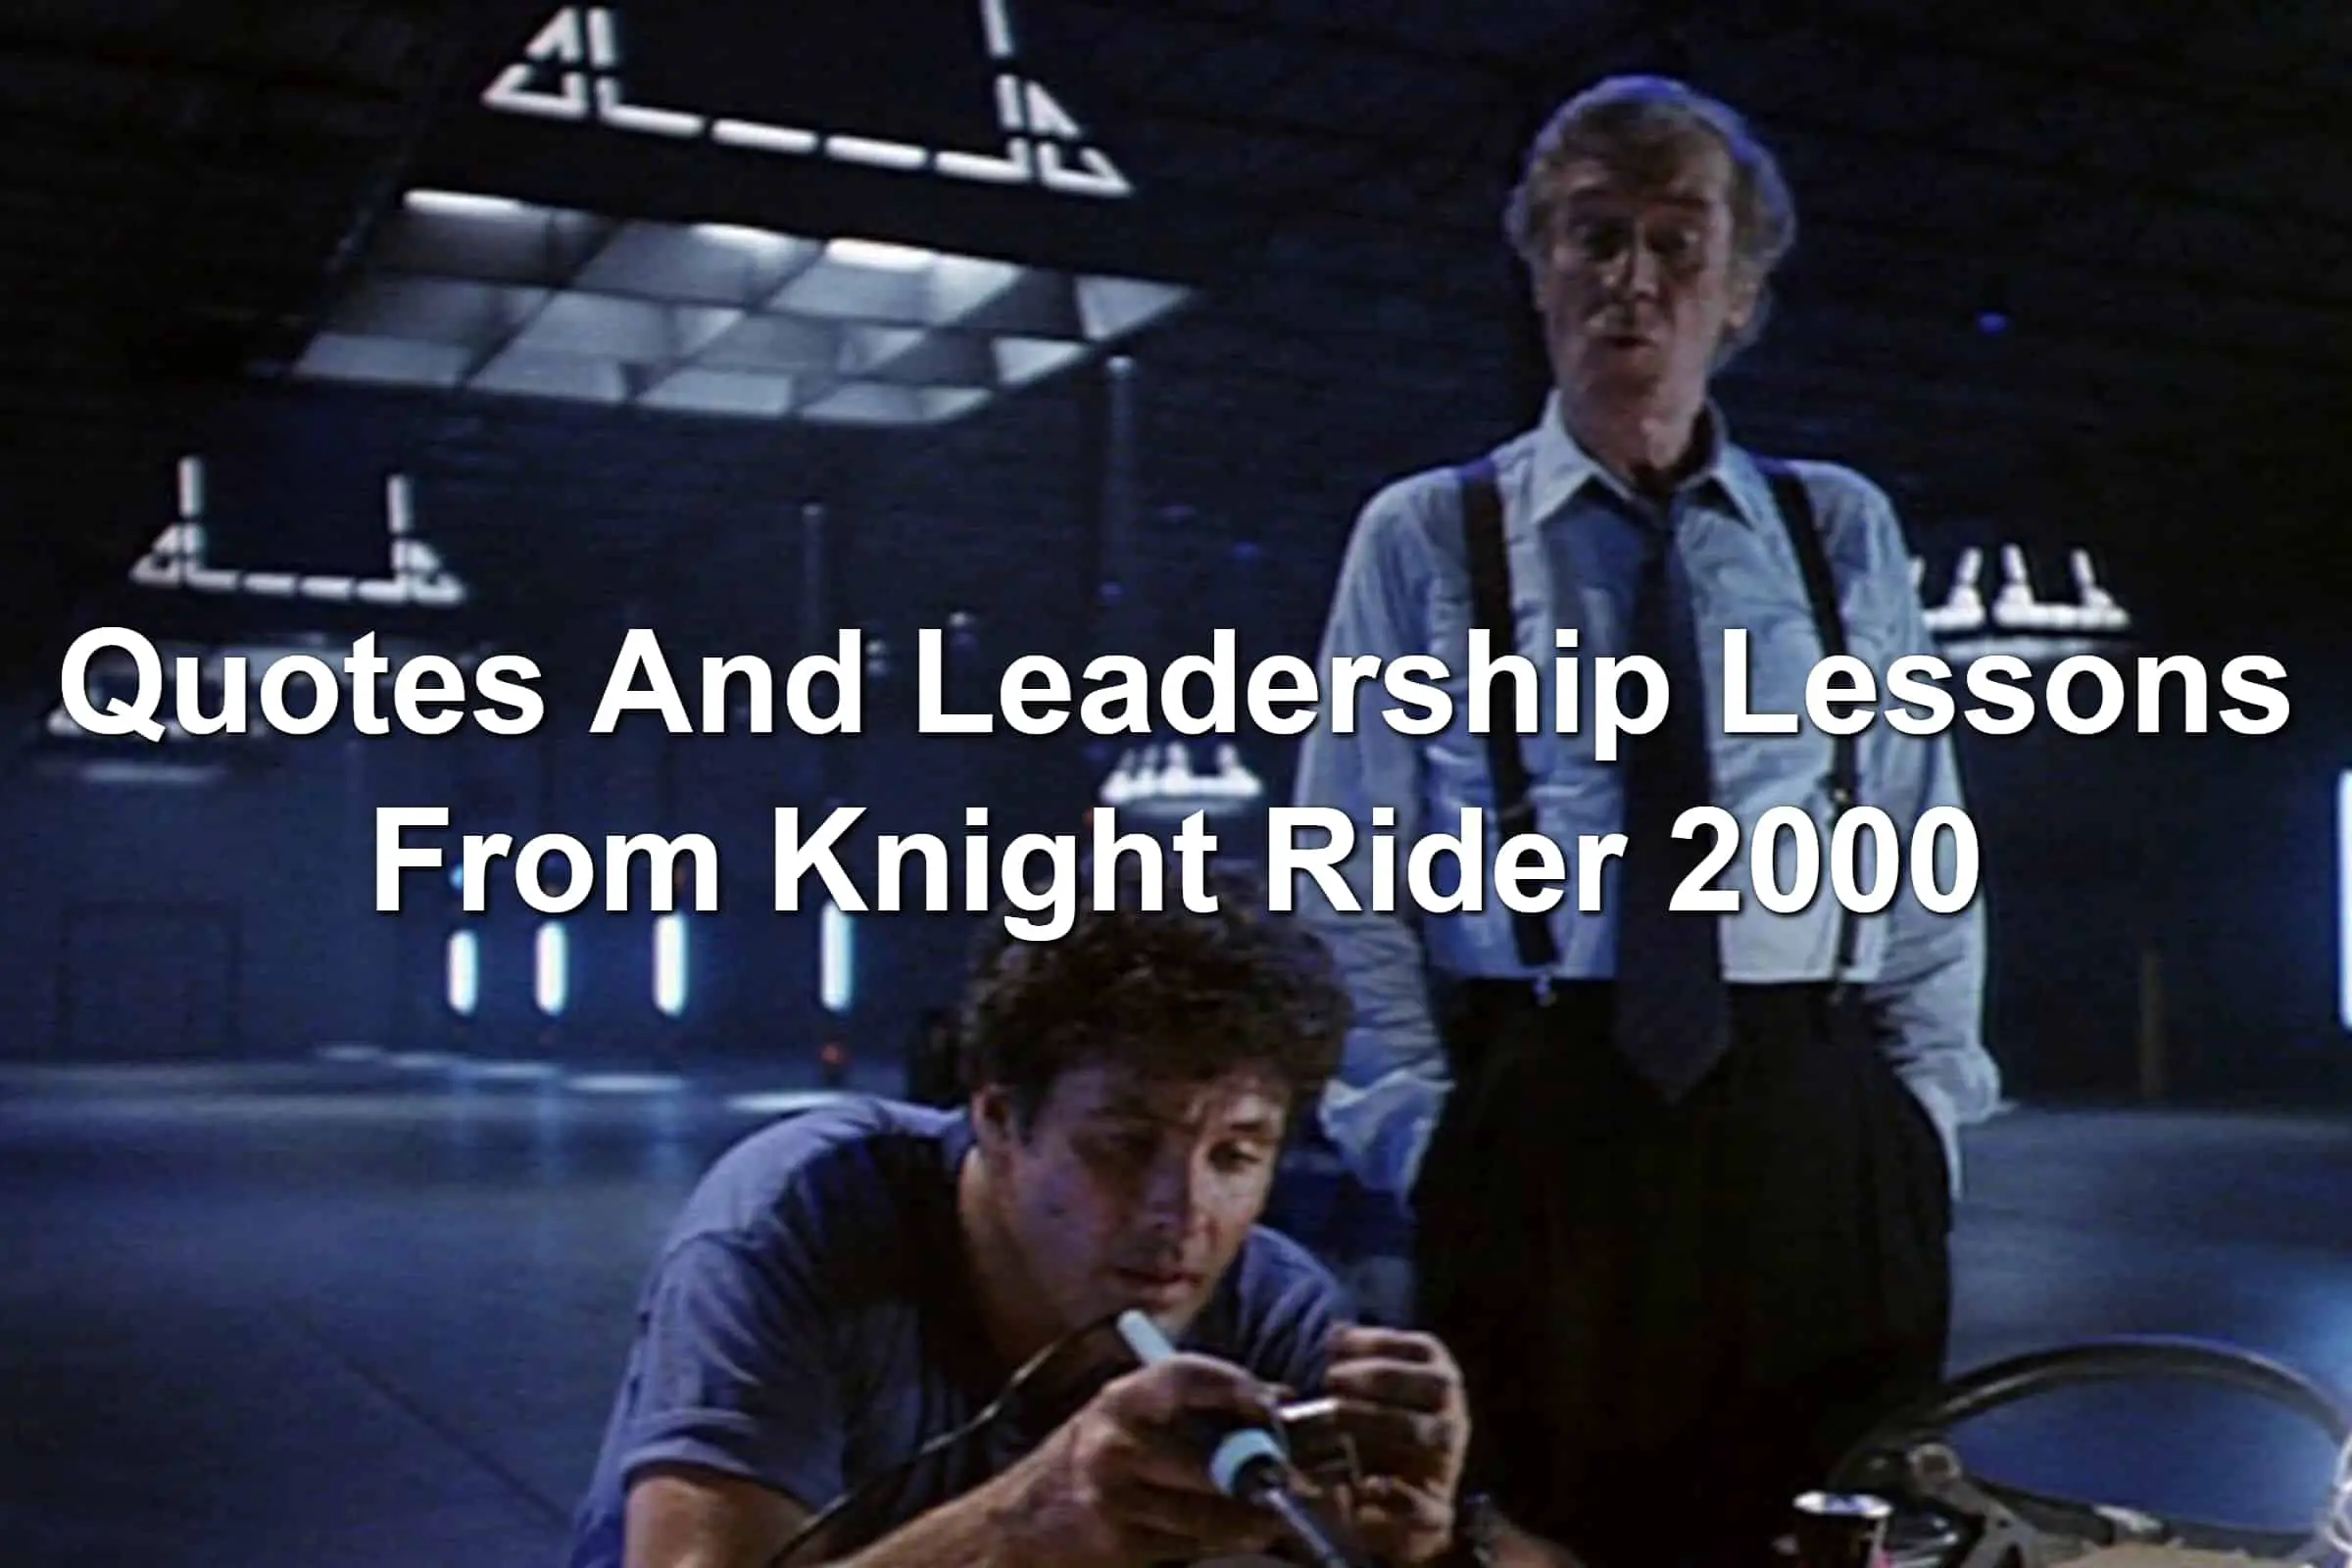 Michael Knight and Devon in Knight Rider 2000